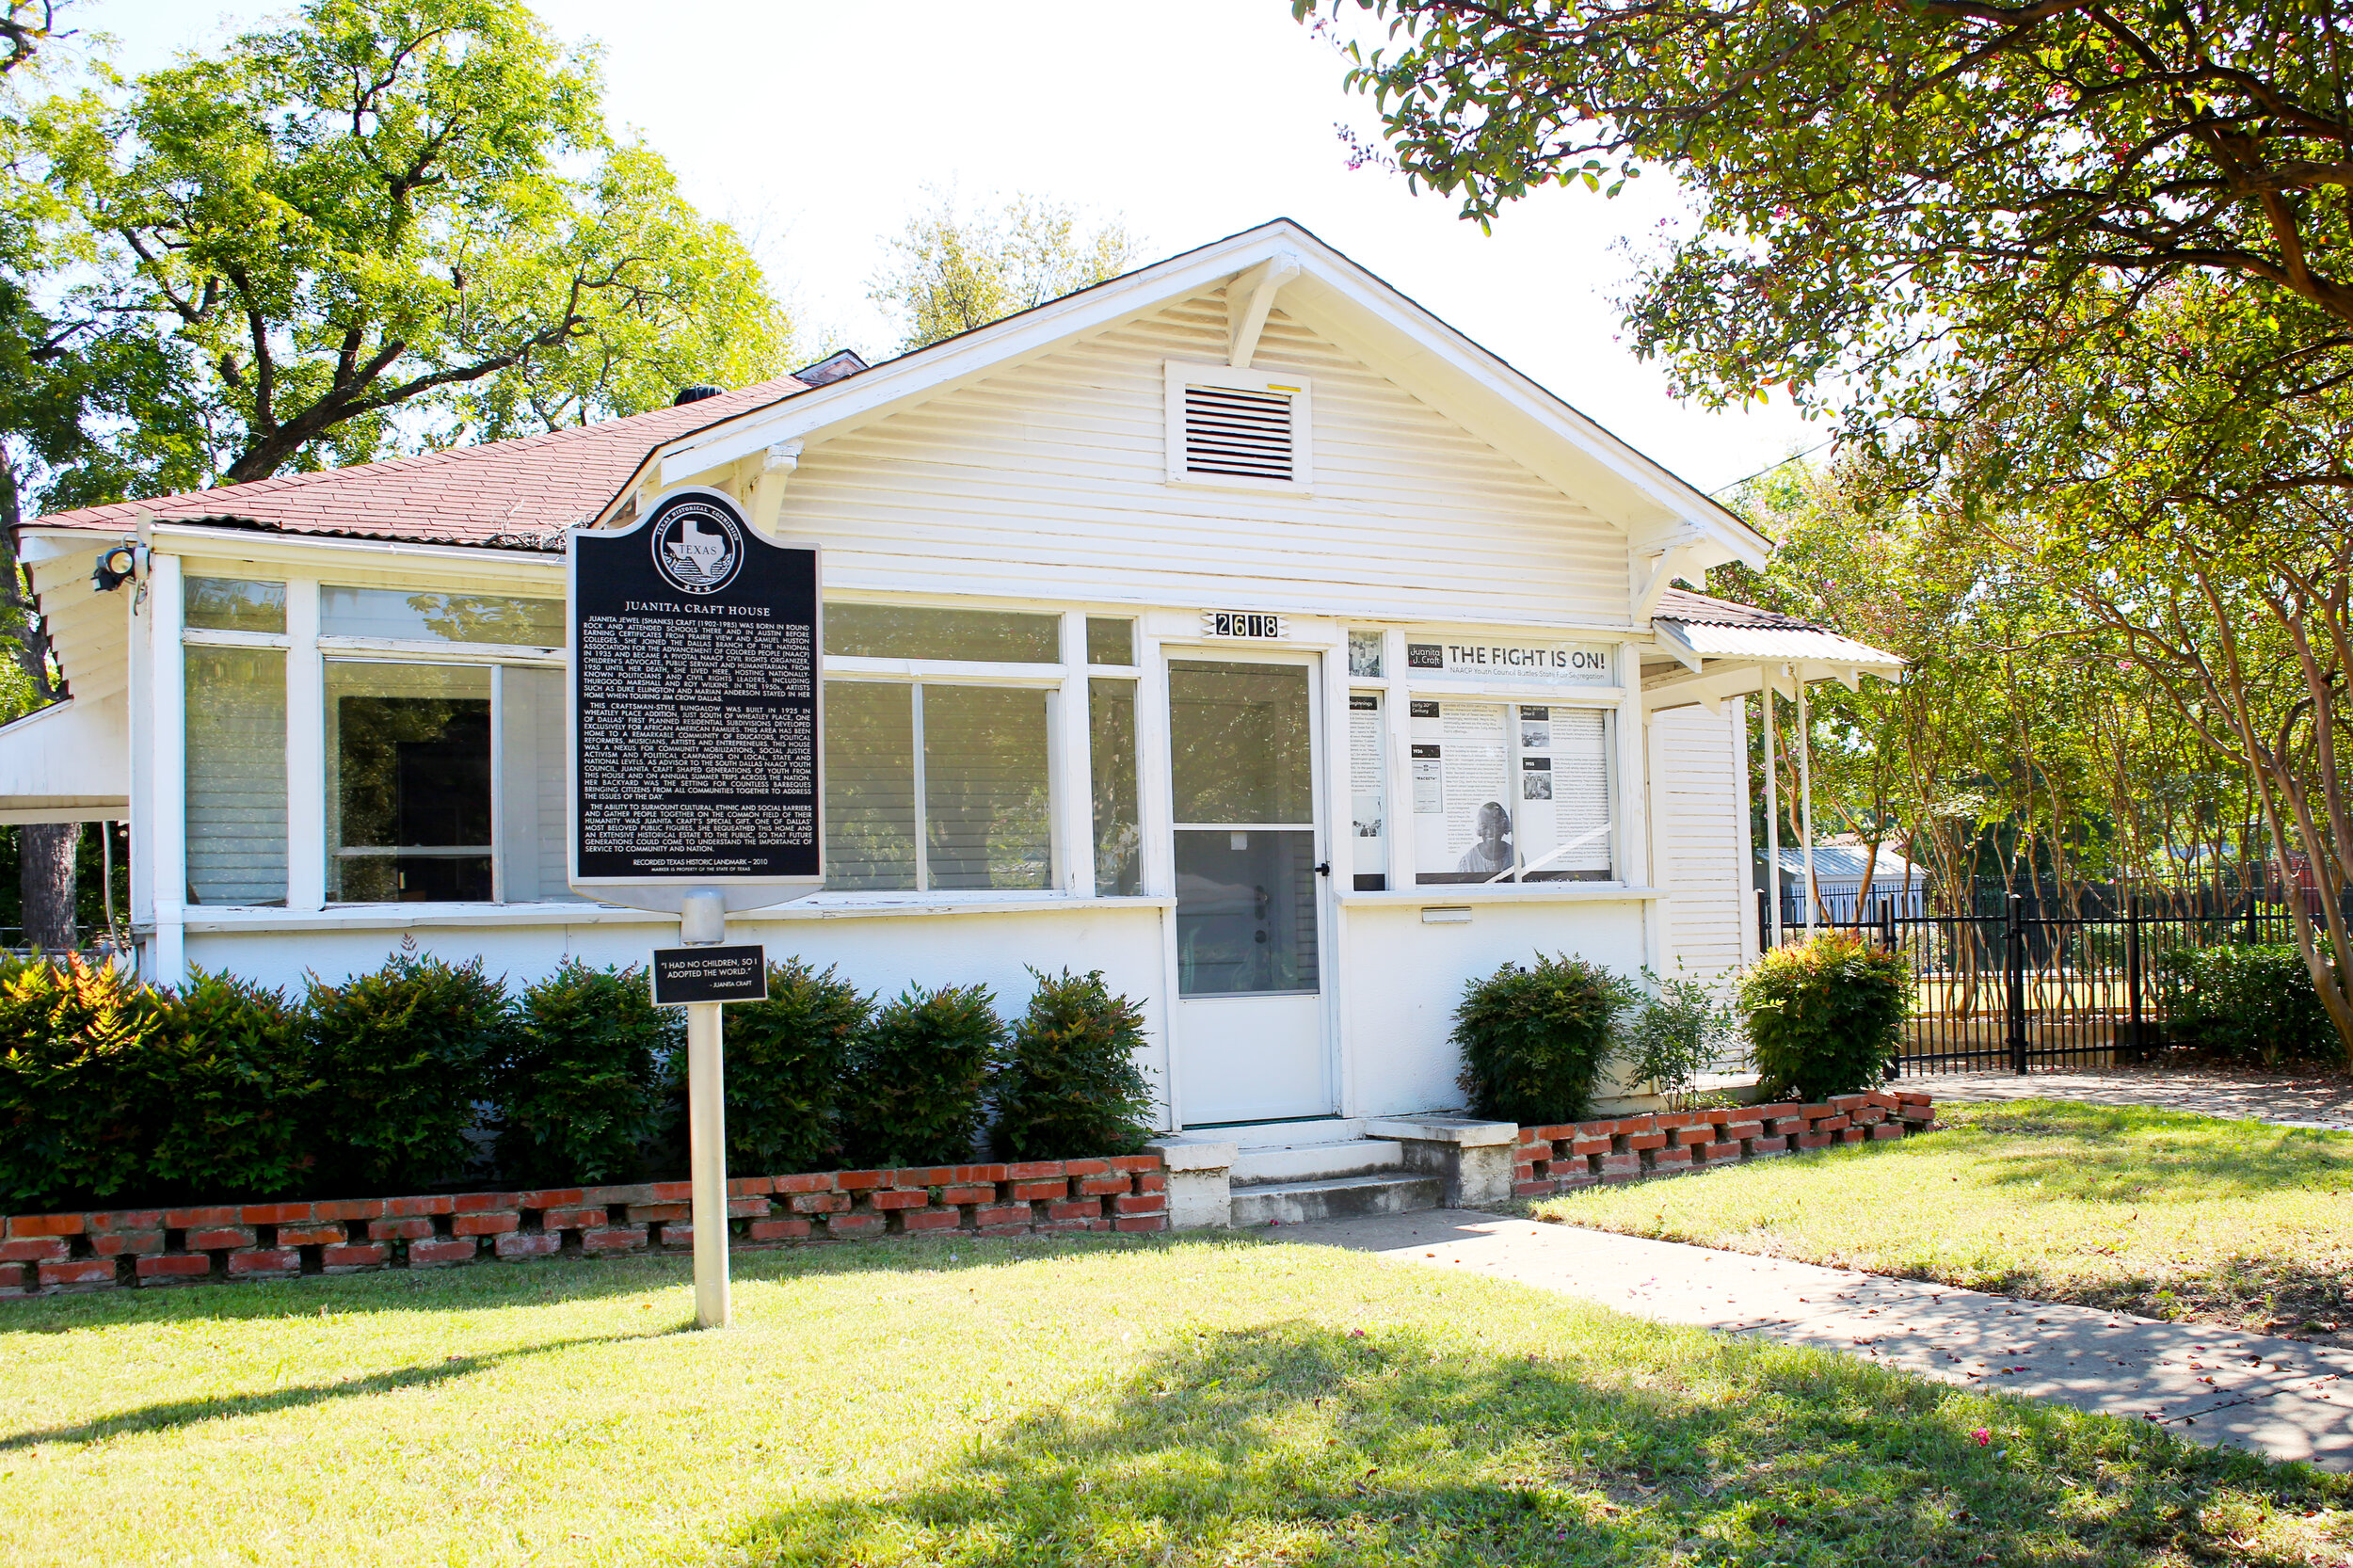 The Juanita Craft Civil Rights House